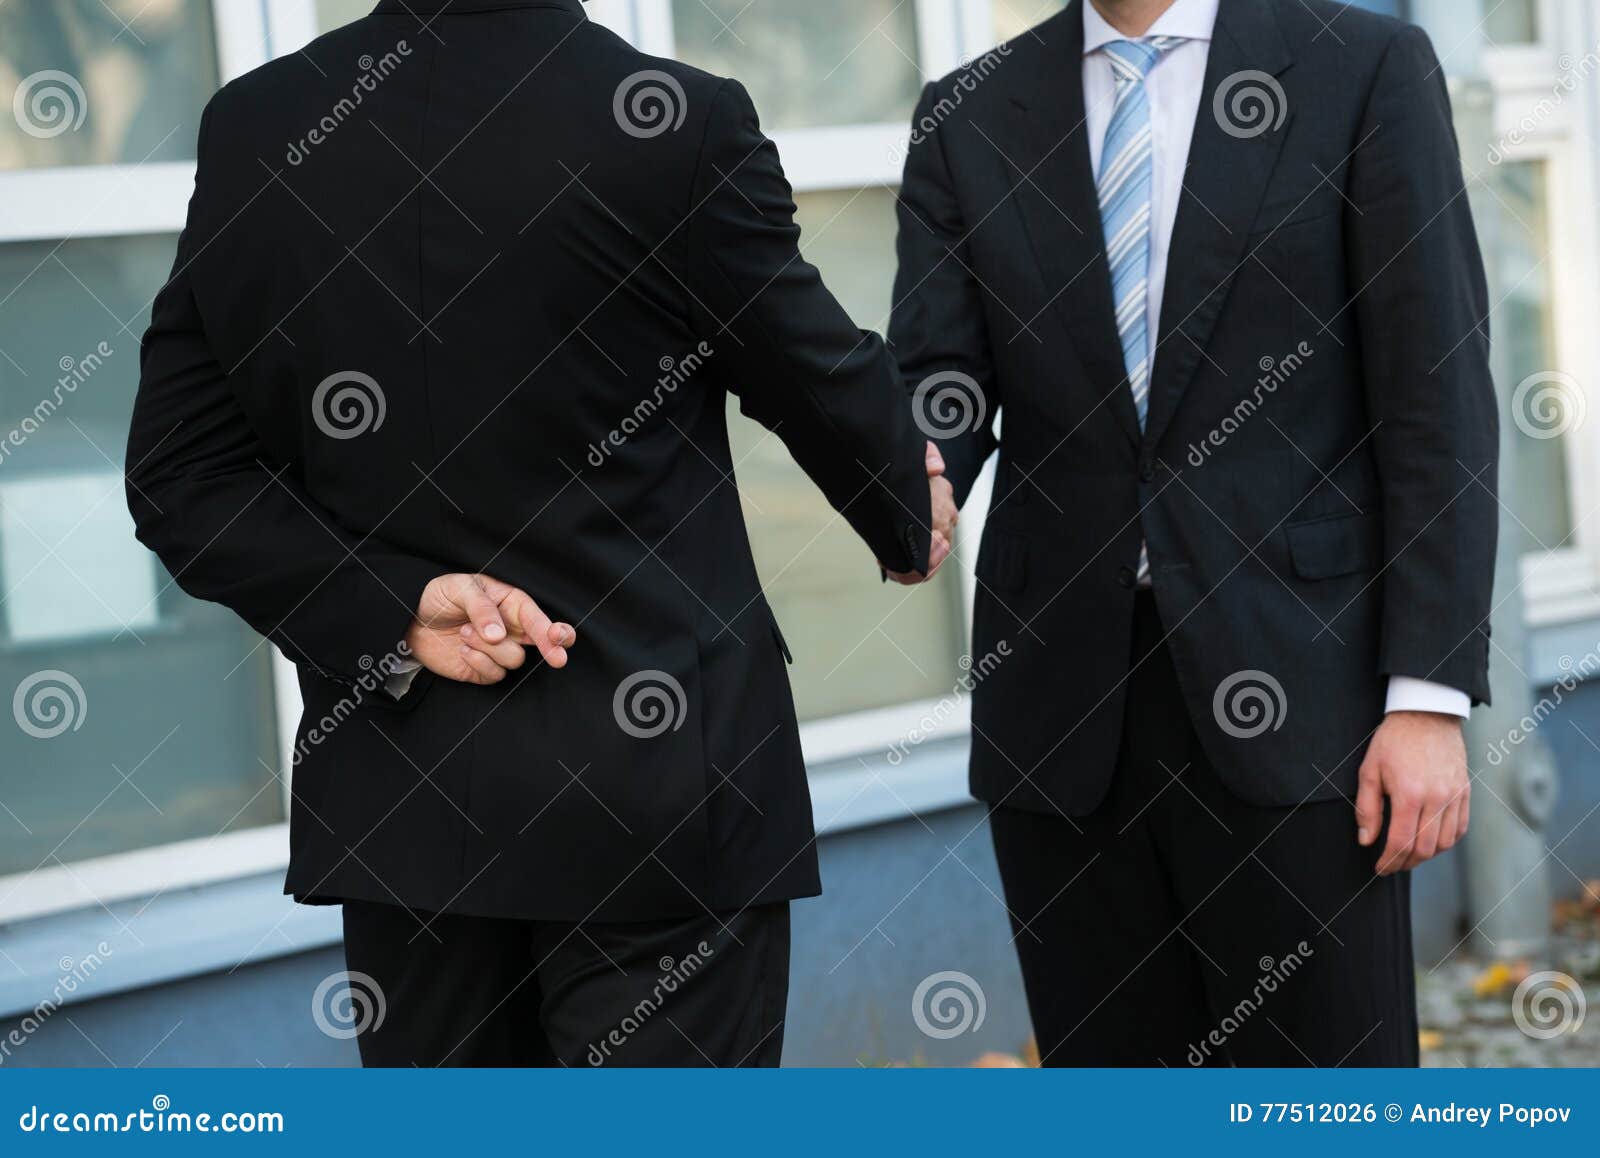 dishonest businessman shaking hands with partner